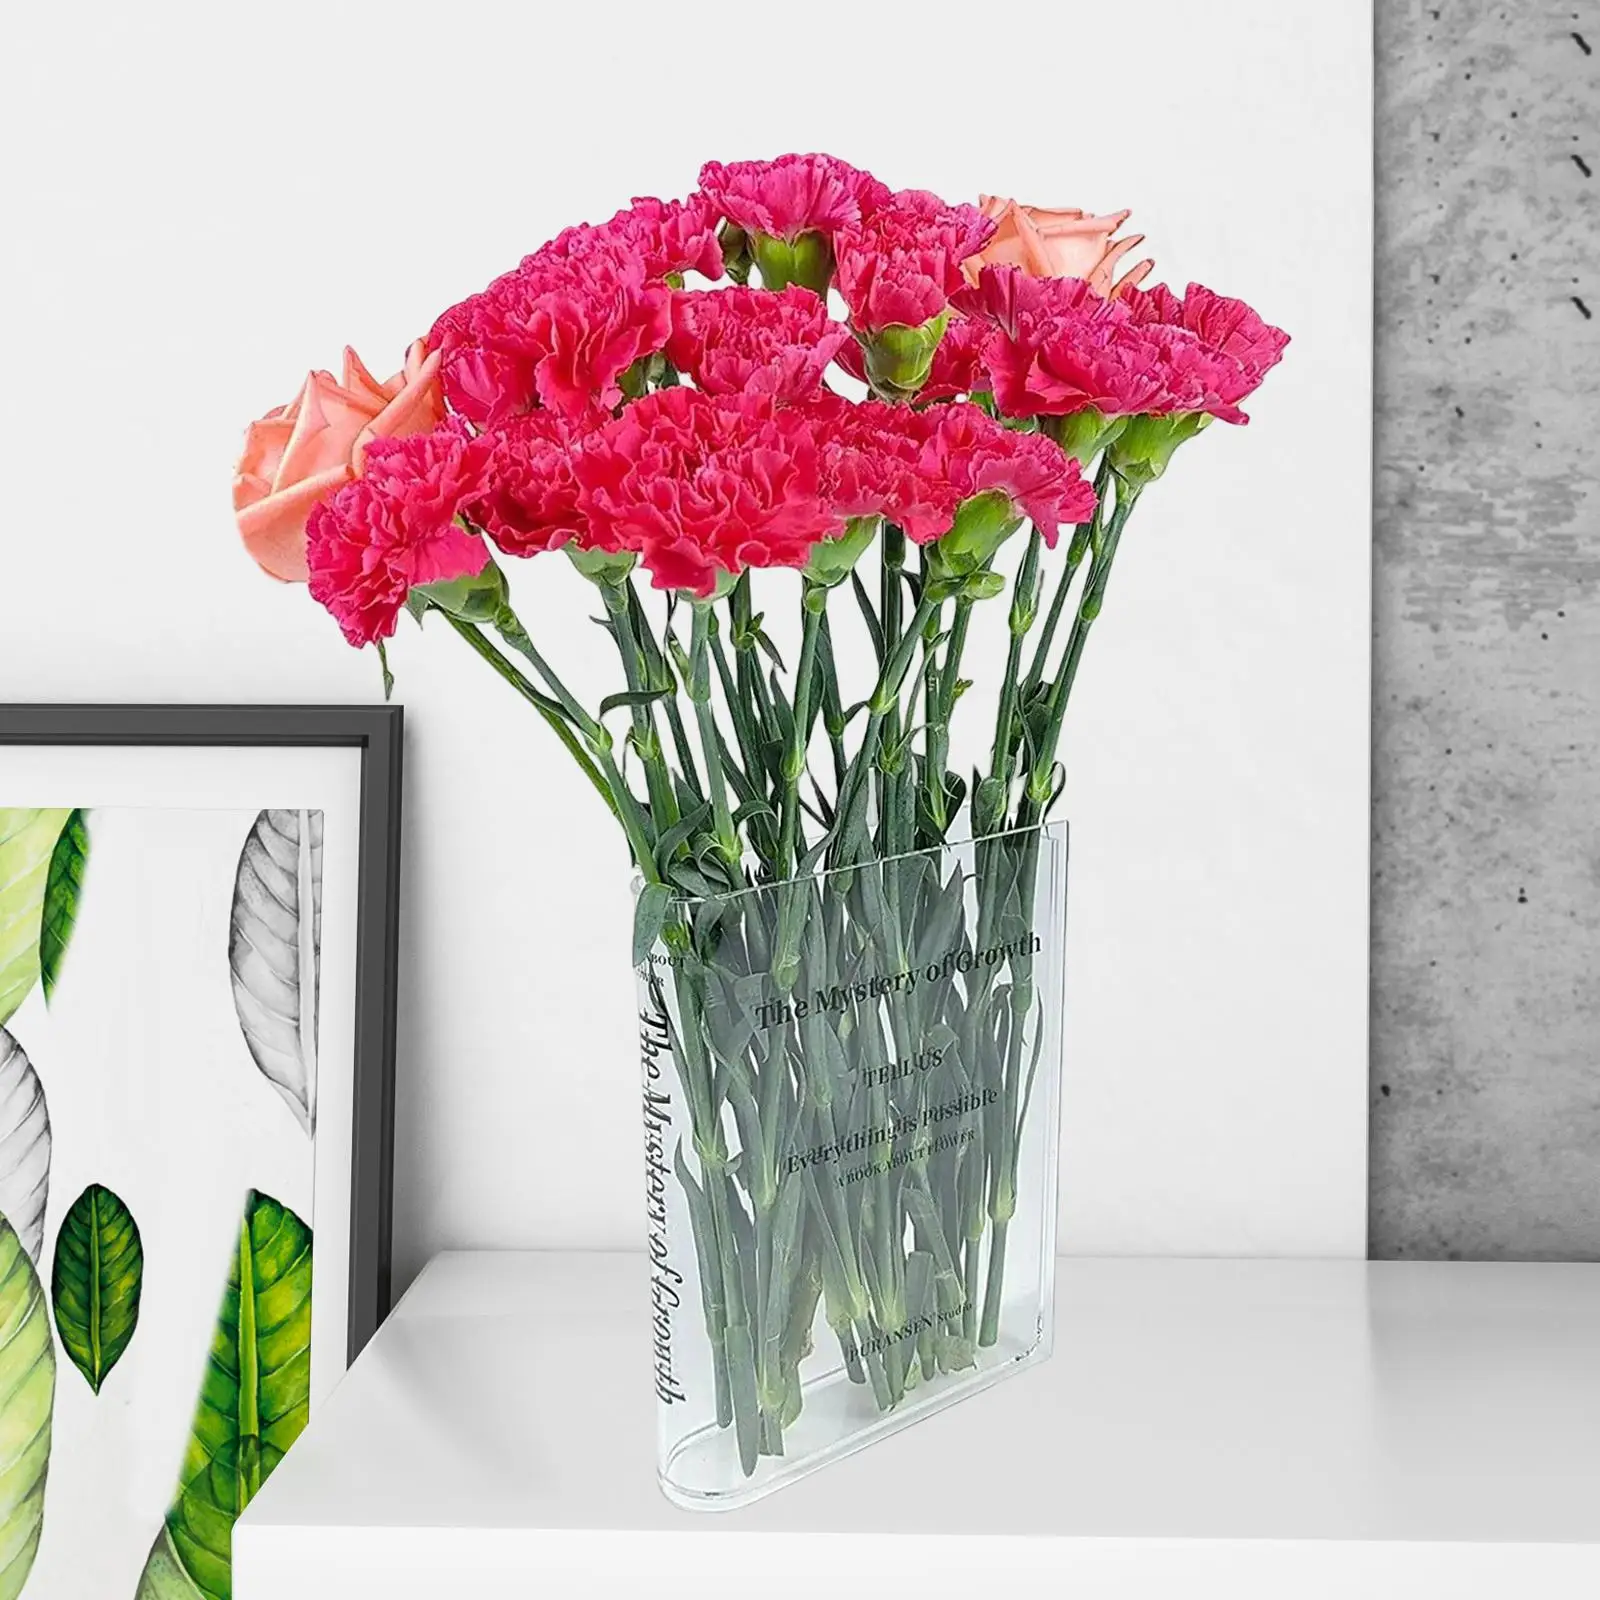 Acrylic Vase Aesthetic Book Shaped Elegant Room Decor Clear Flower Vase for Flower Shop Wedding Home Restaurant Bouquet Holder